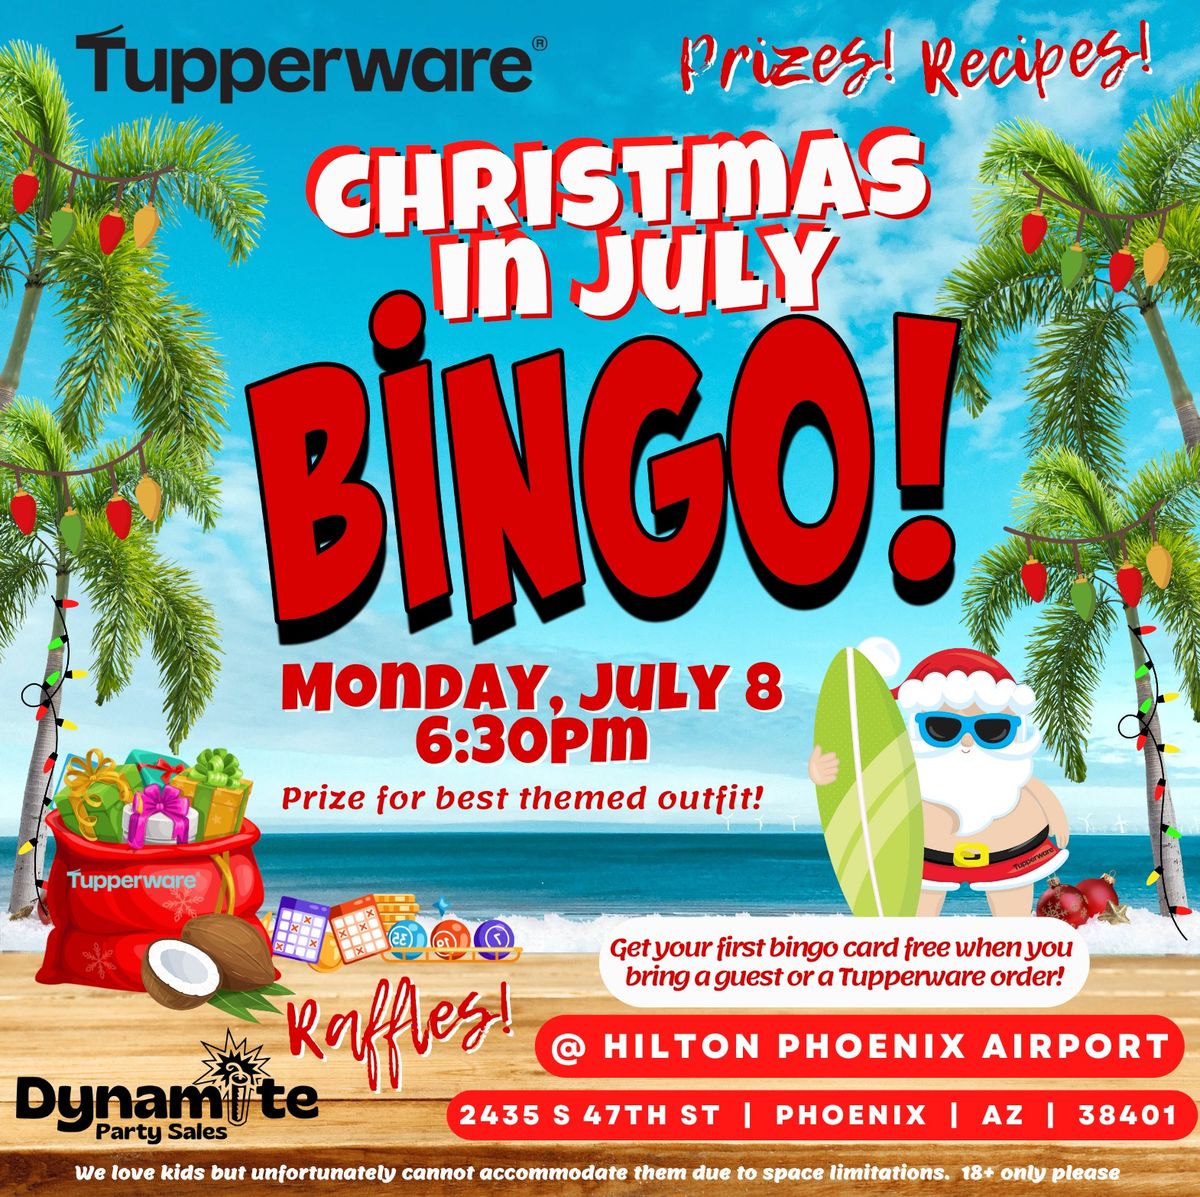 Tupperware Christmas In July Bingo!